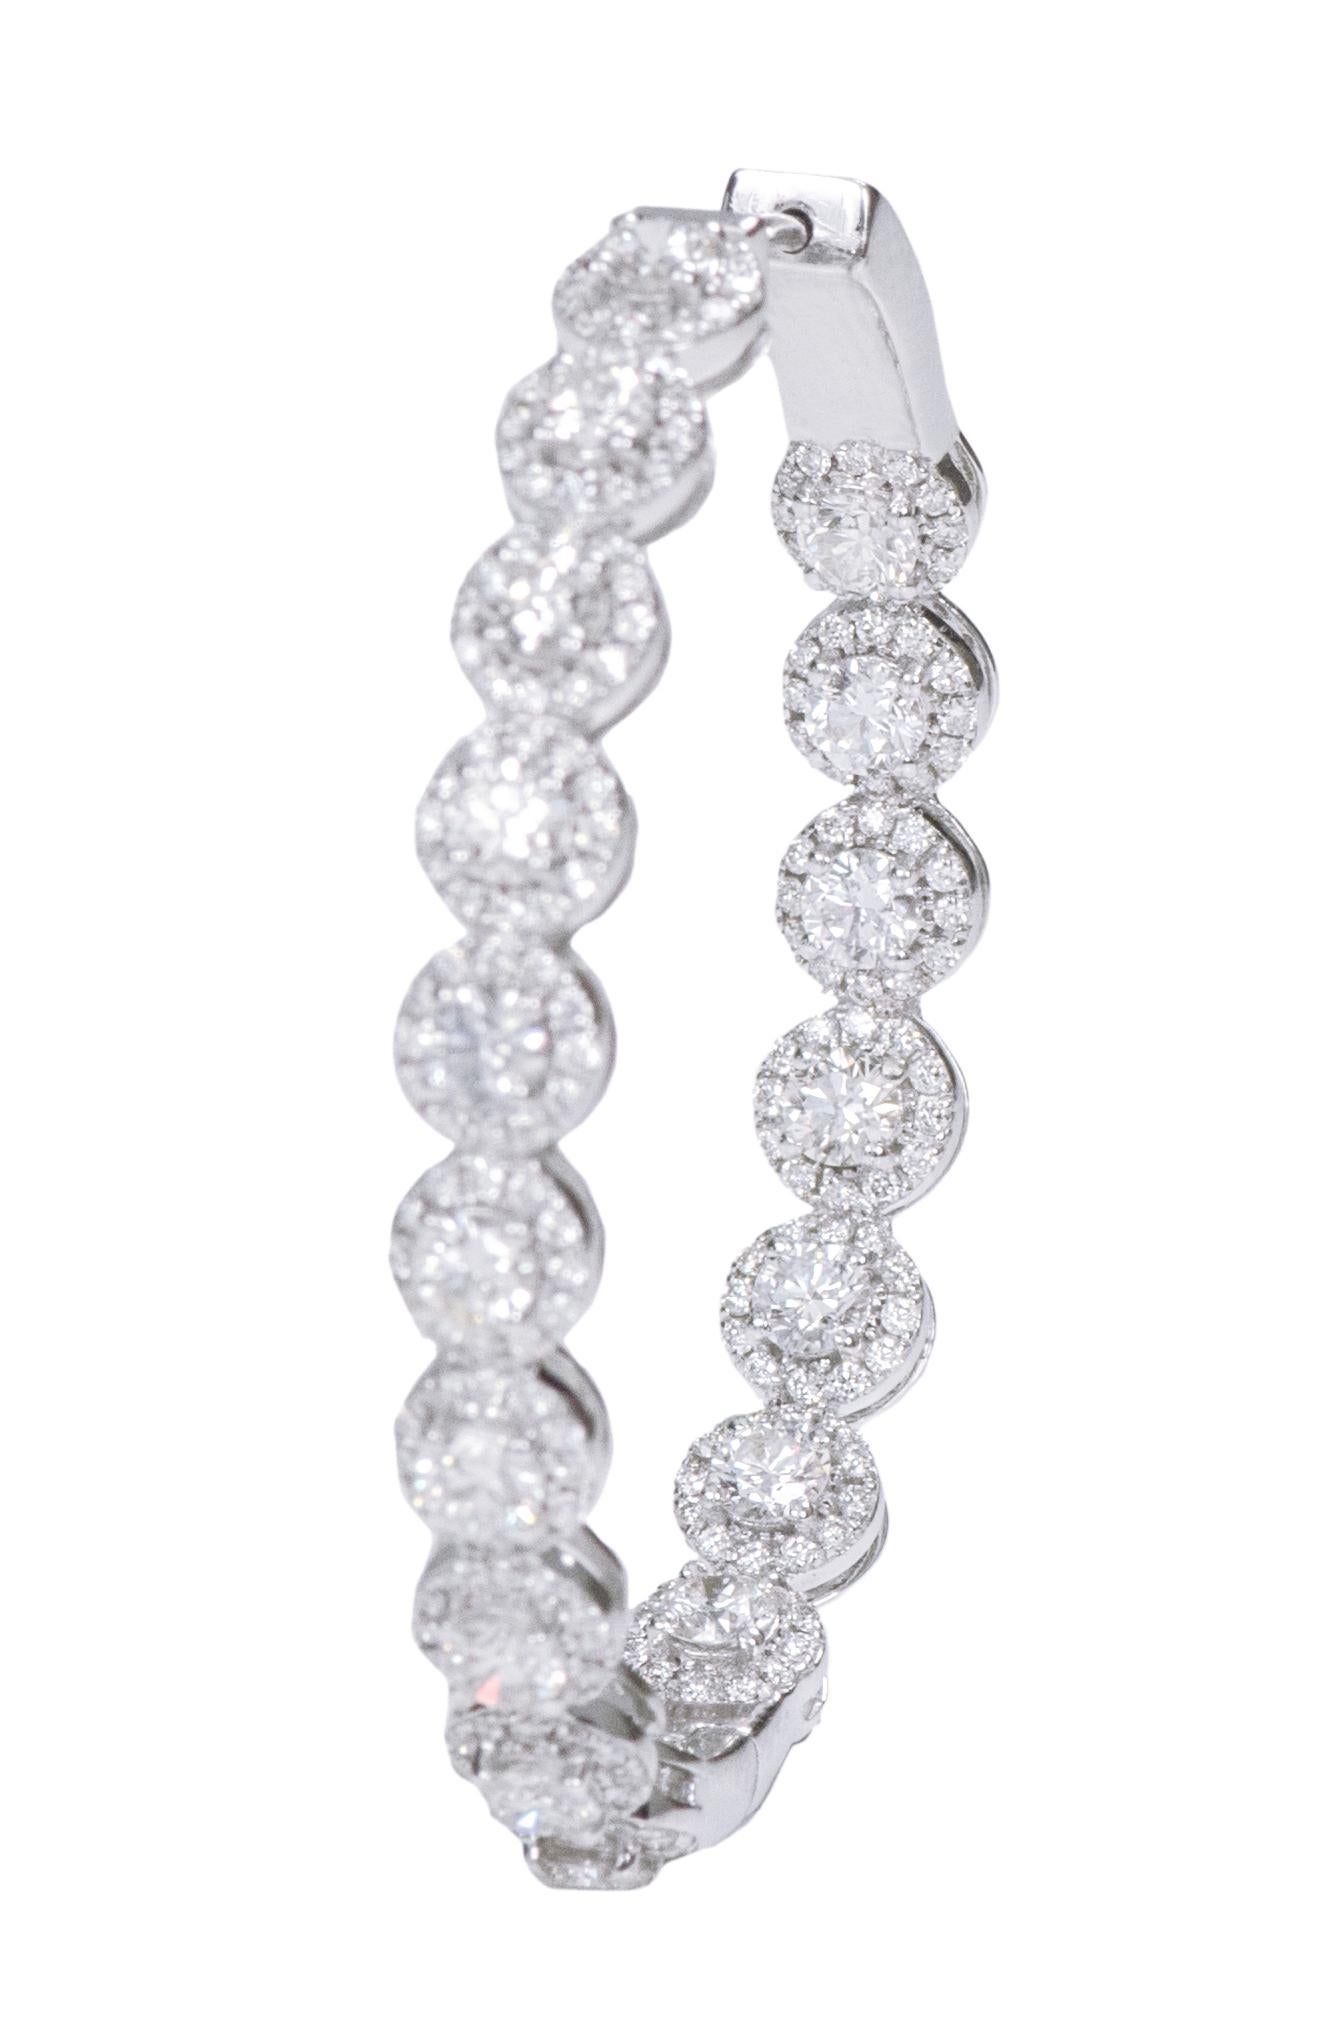 18 Karat White Gold 5.17 Carat Brilliant-Cut Diamond Cluster Hoop Earrings For Sale 5